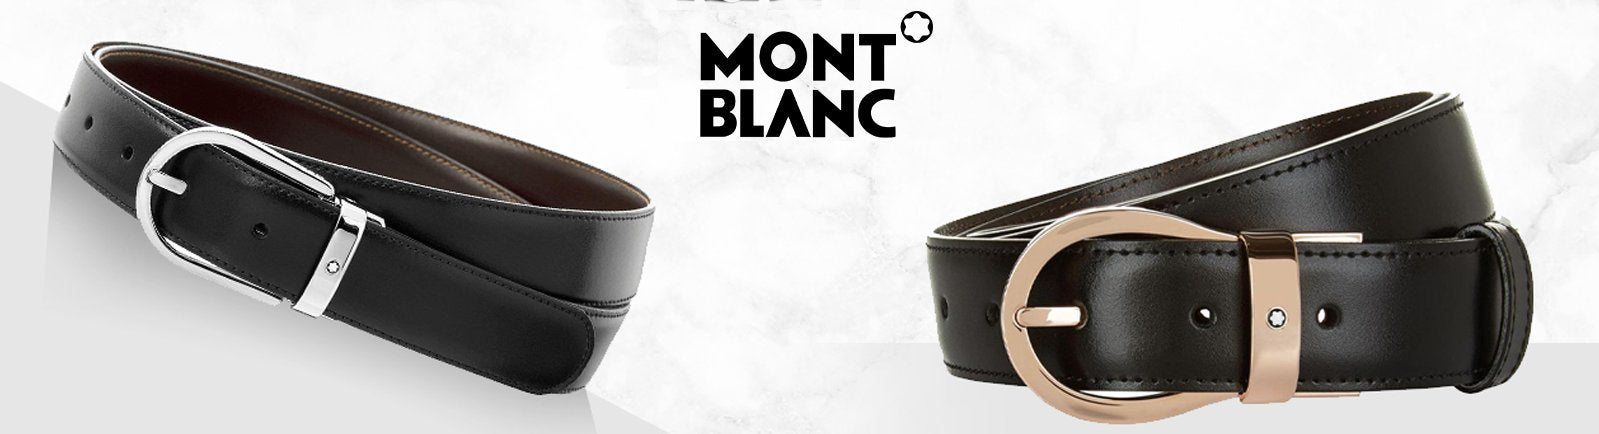 Montblanc Leather